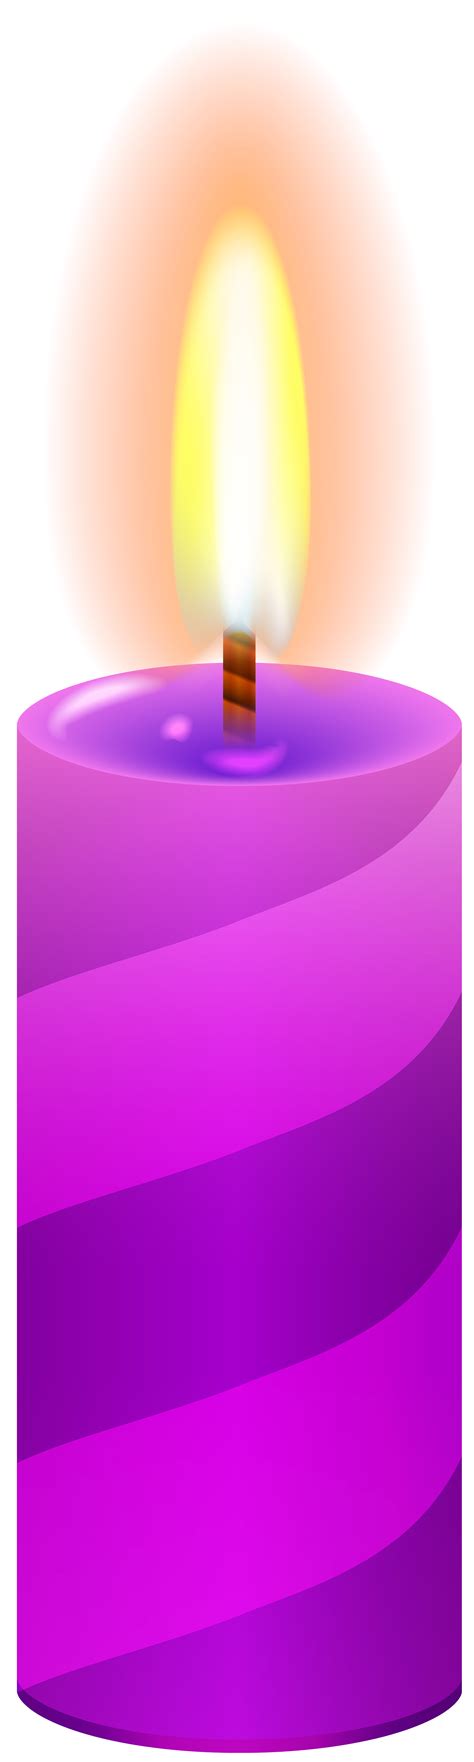 Purple Birthday Candle Clip Art